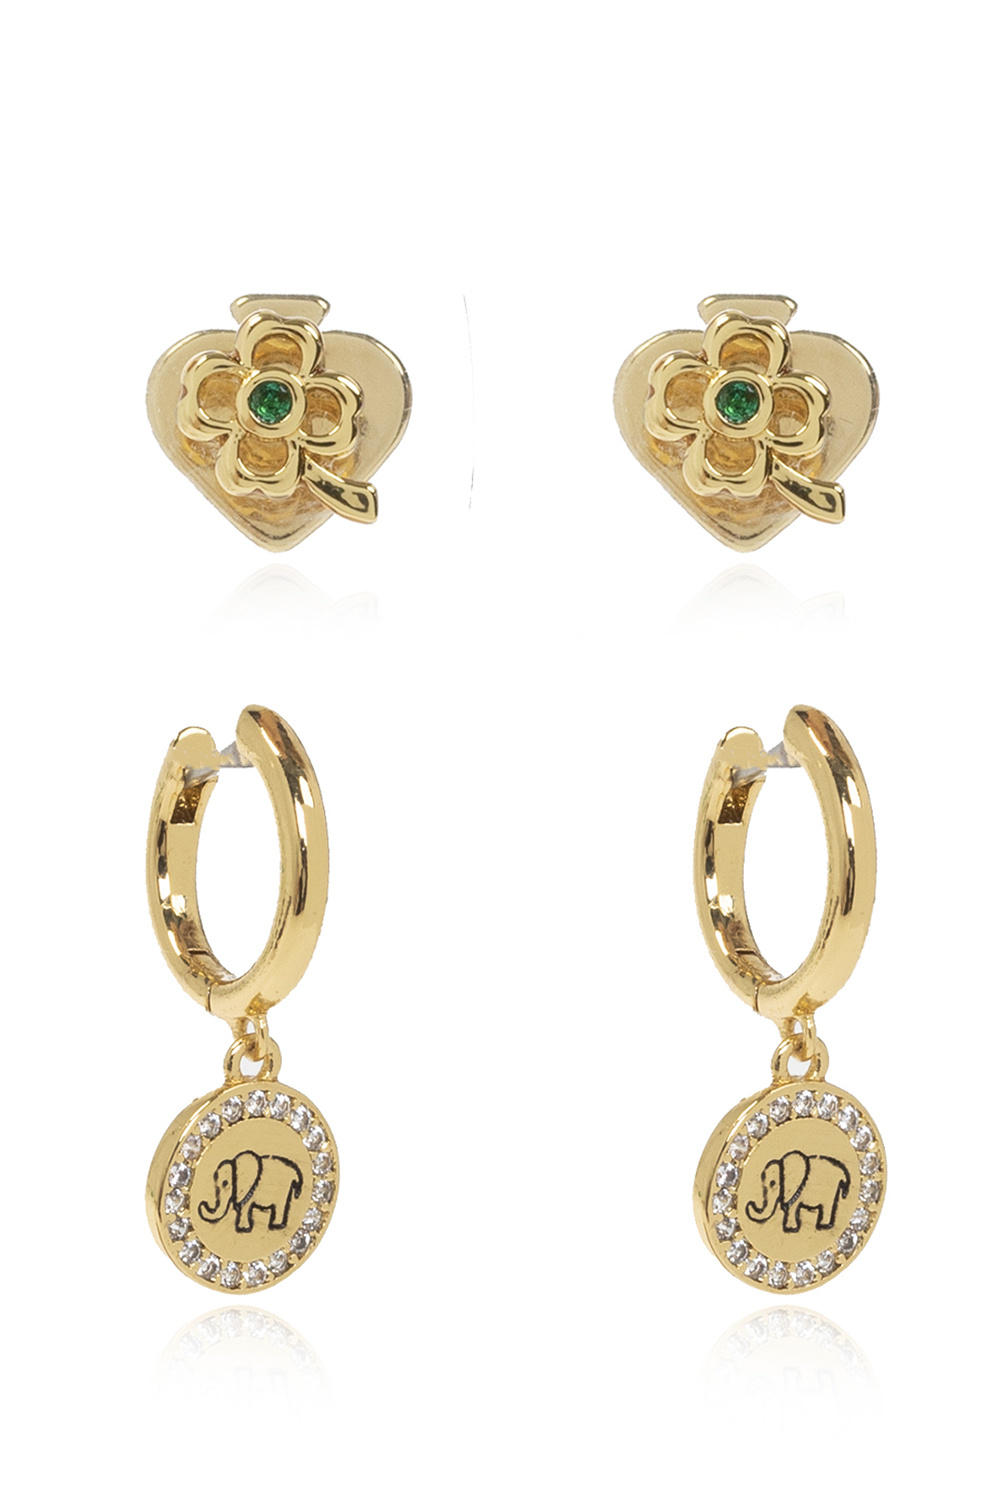 Wishes' set of earrings Kate Spade - IetpShops Belgium